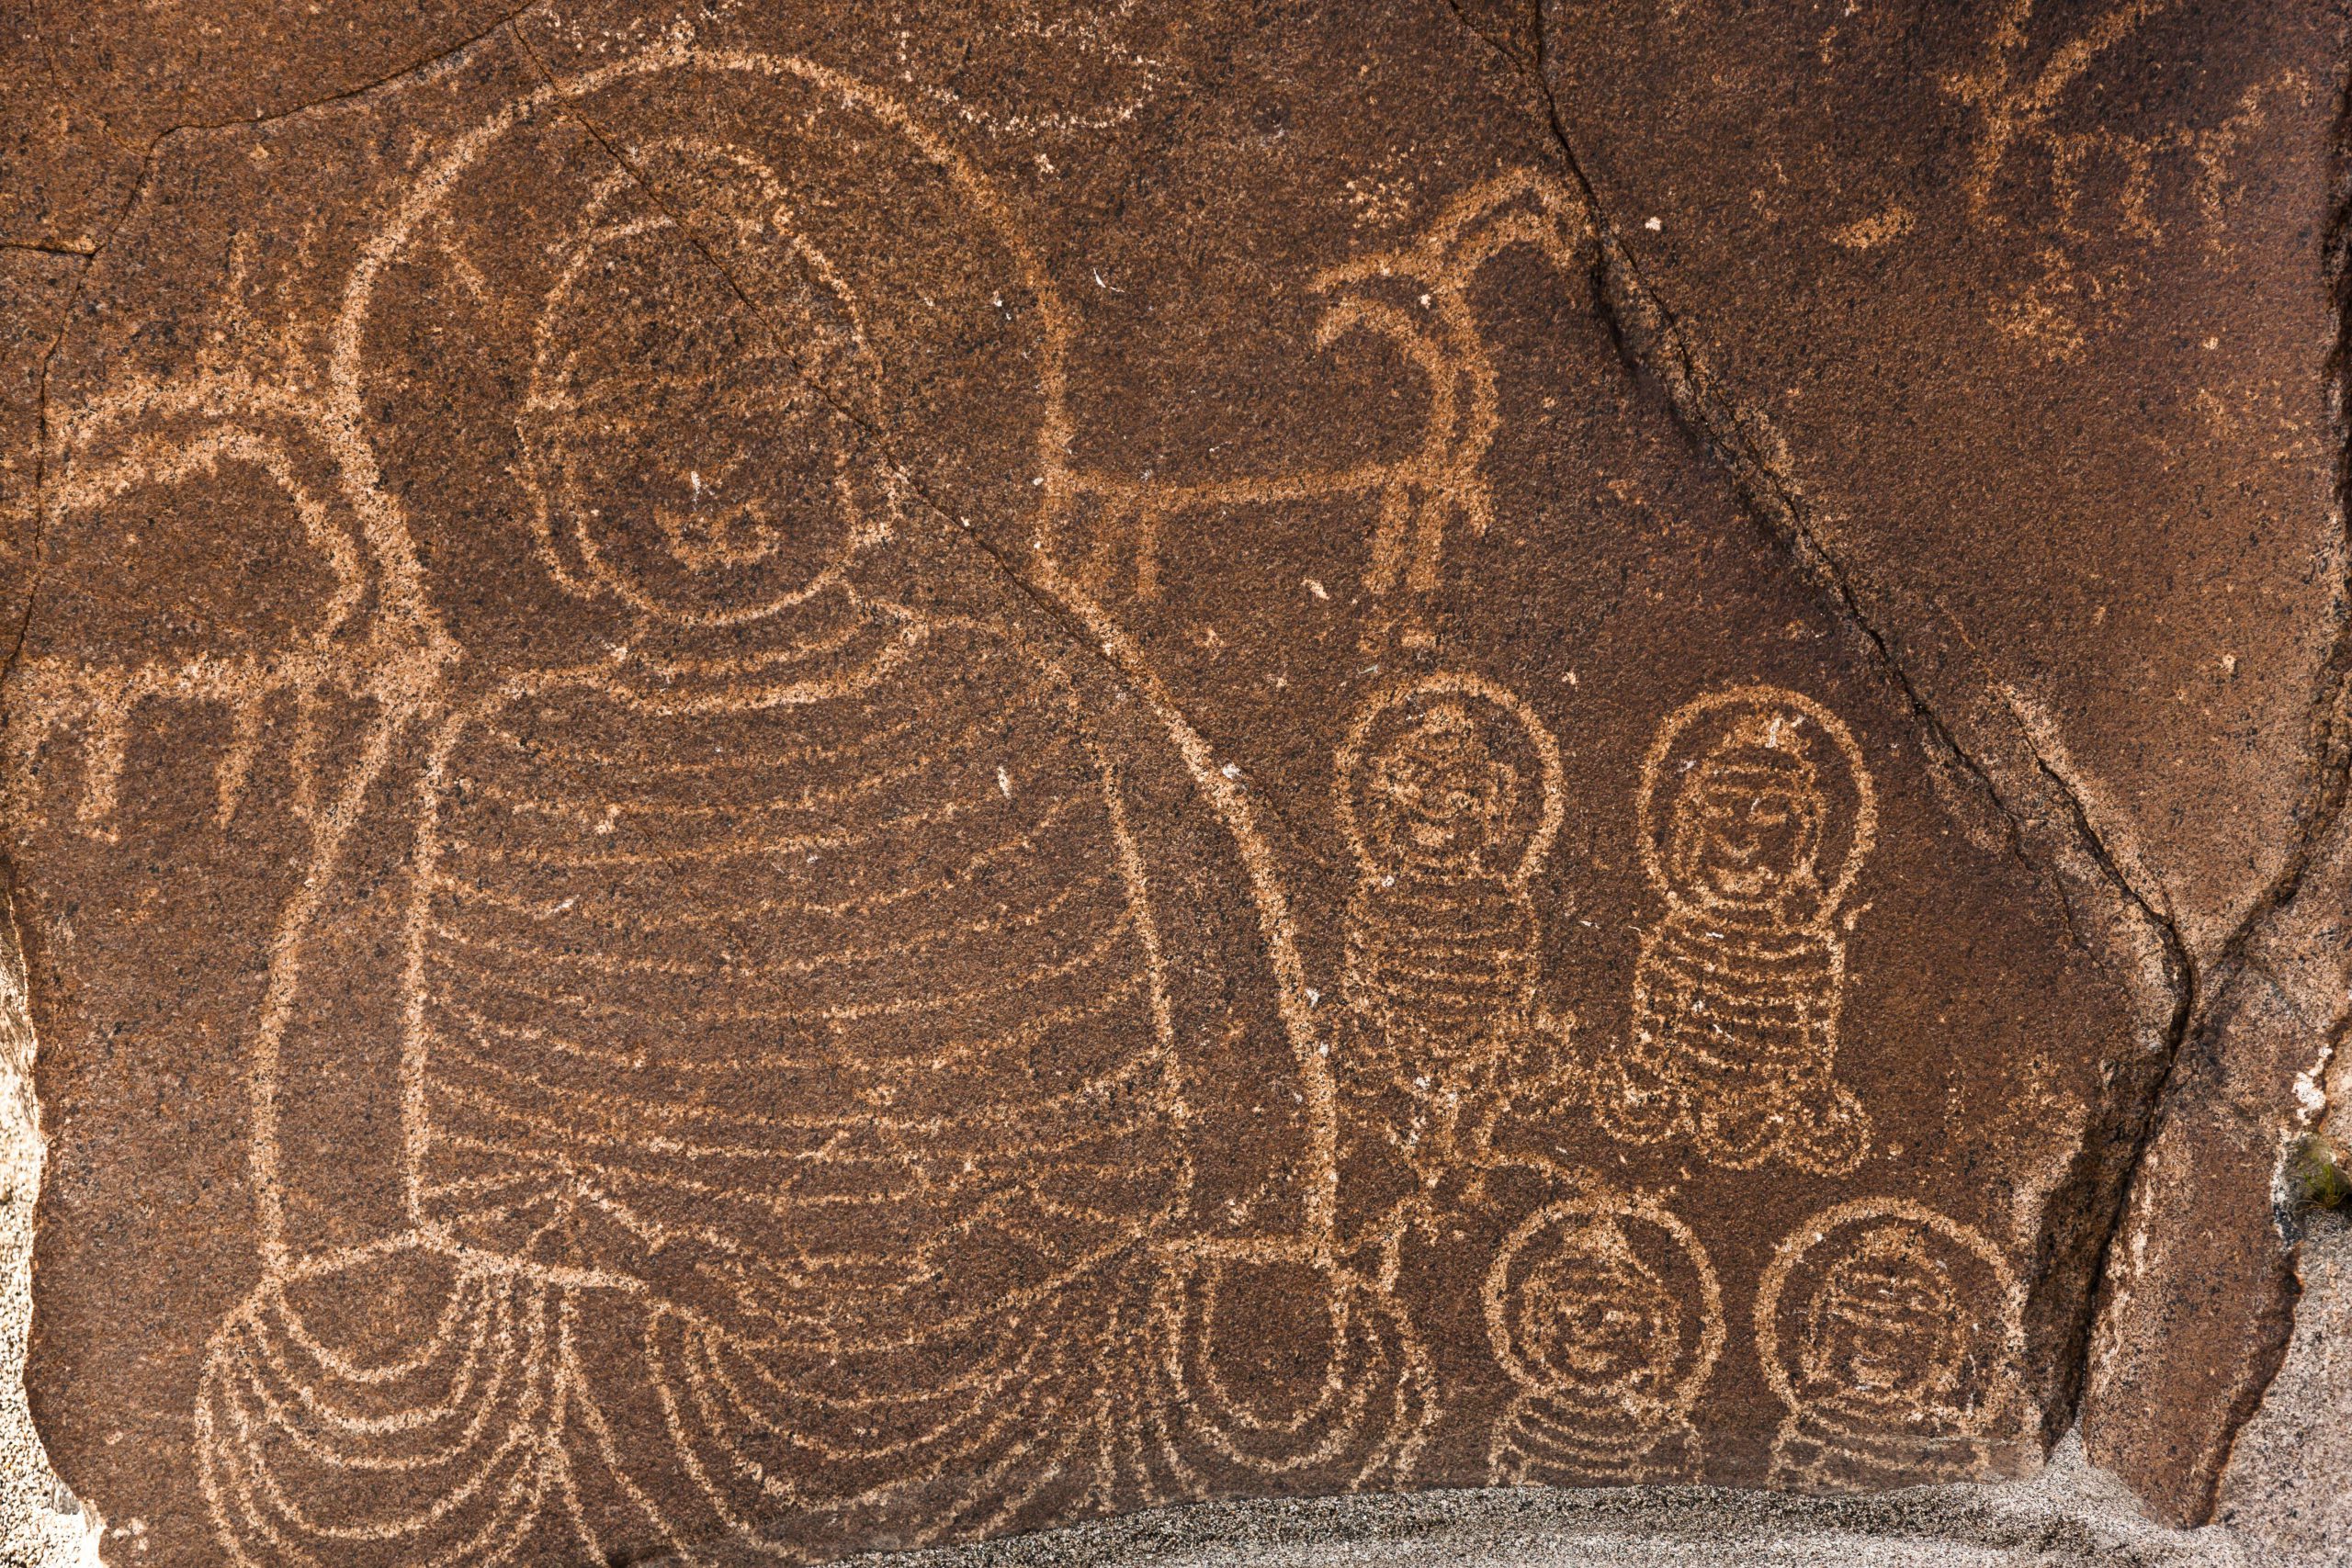 Buddhist ancient rock art in Pakistan